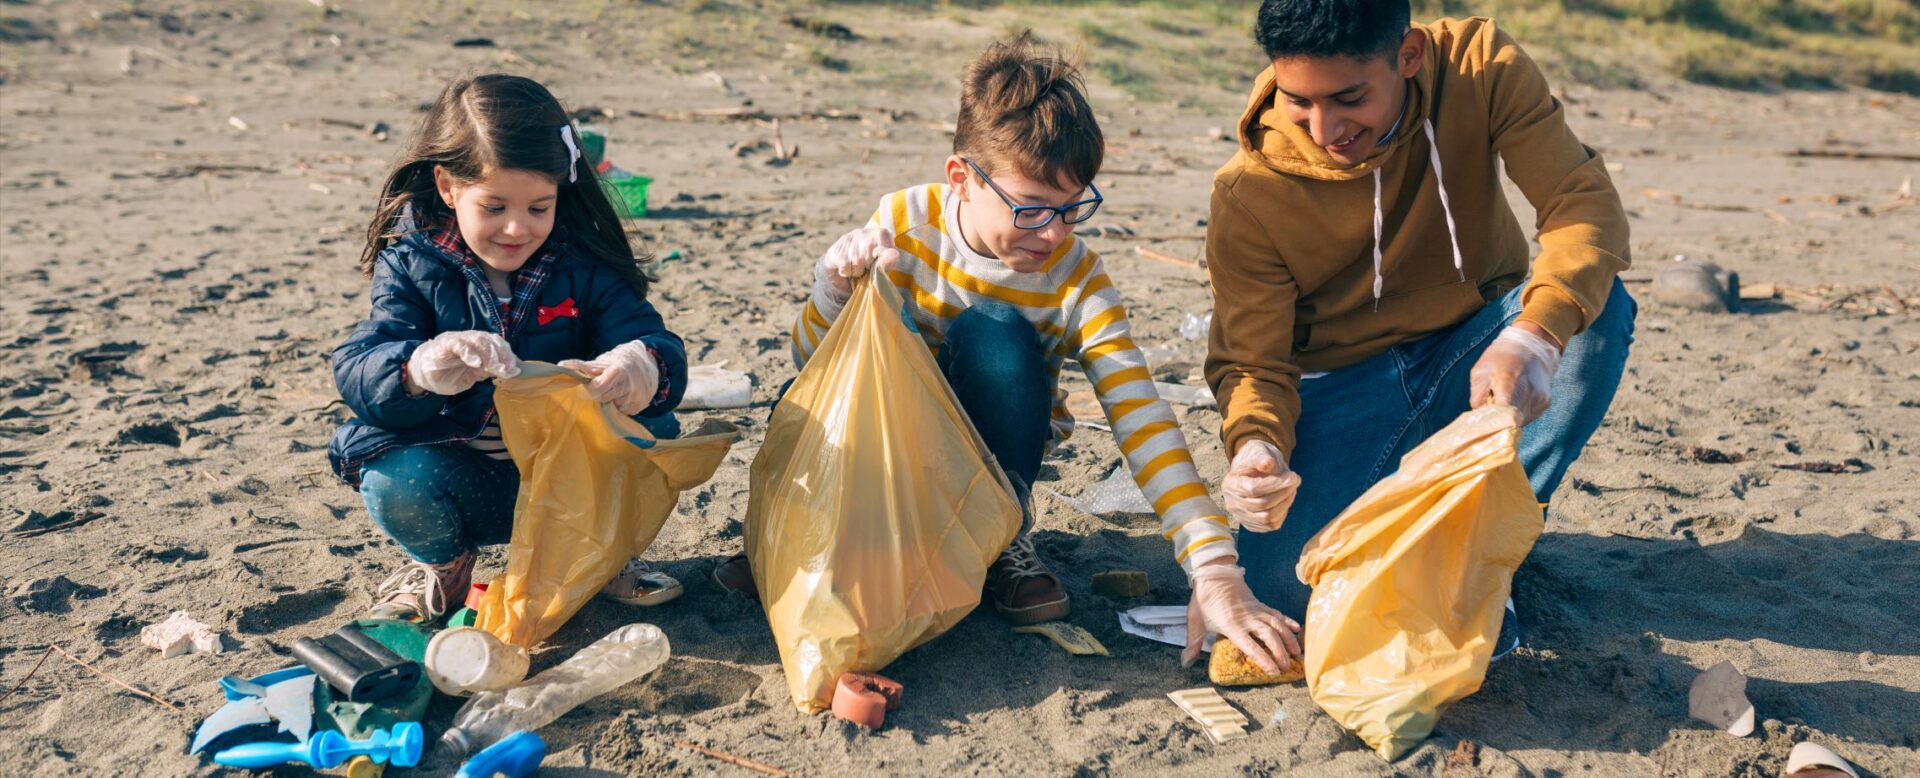 Three children collecting litter from a sandy beach